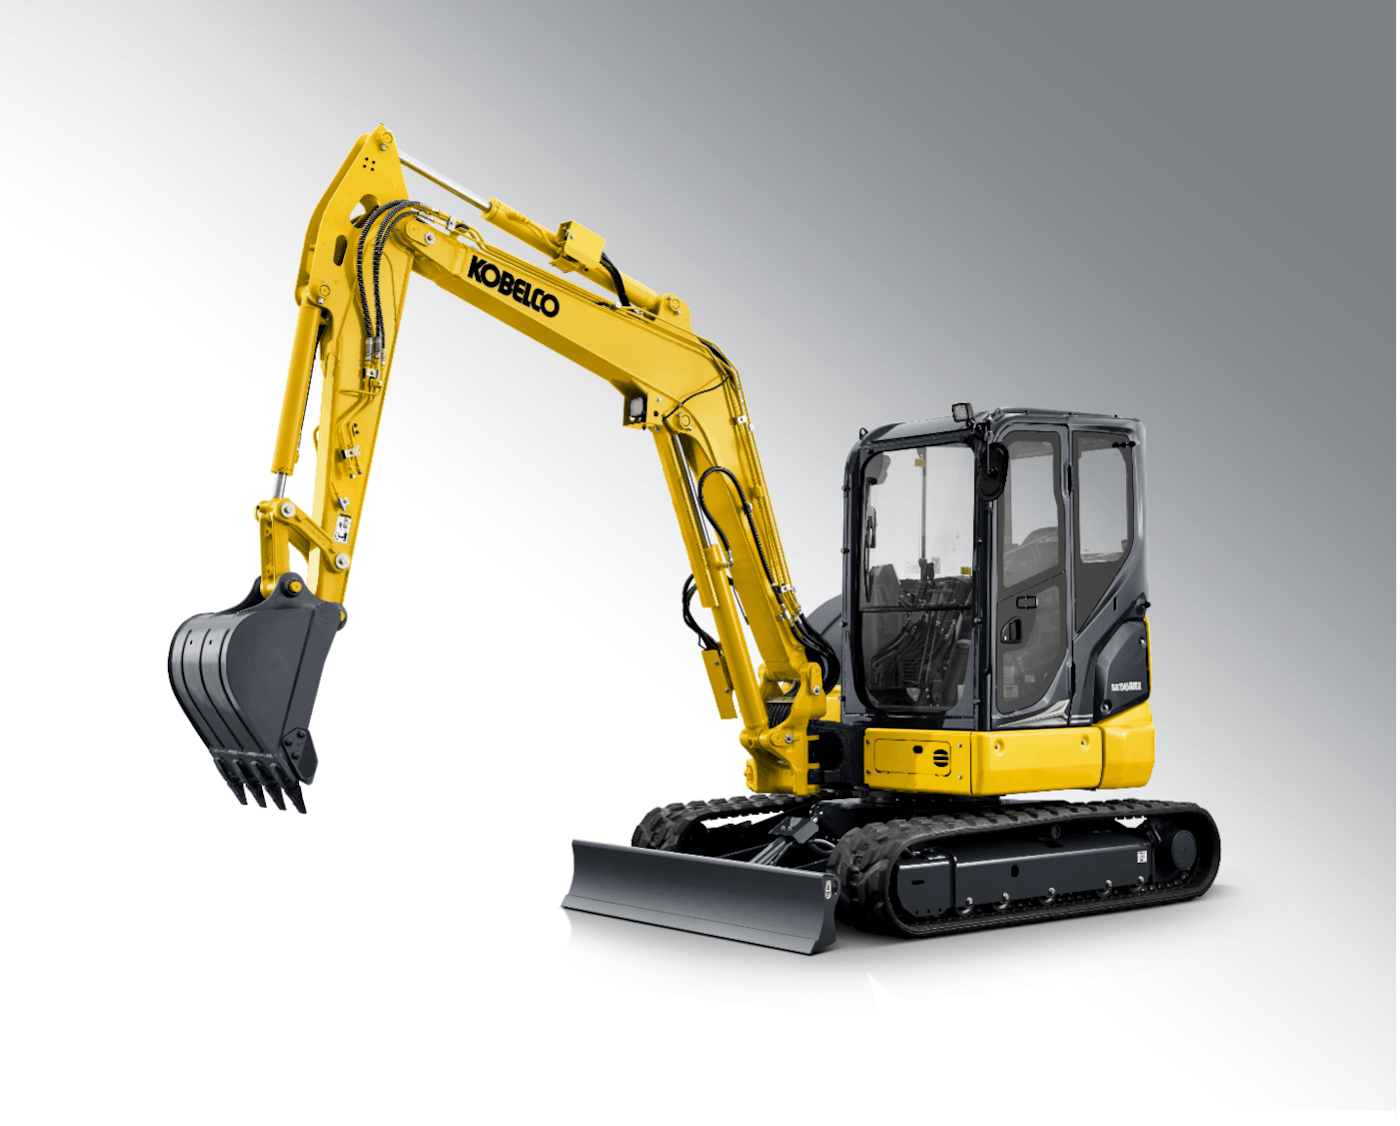 Kobelco launches 5-ton KS45SRX-7 compact excavator | Equipment World